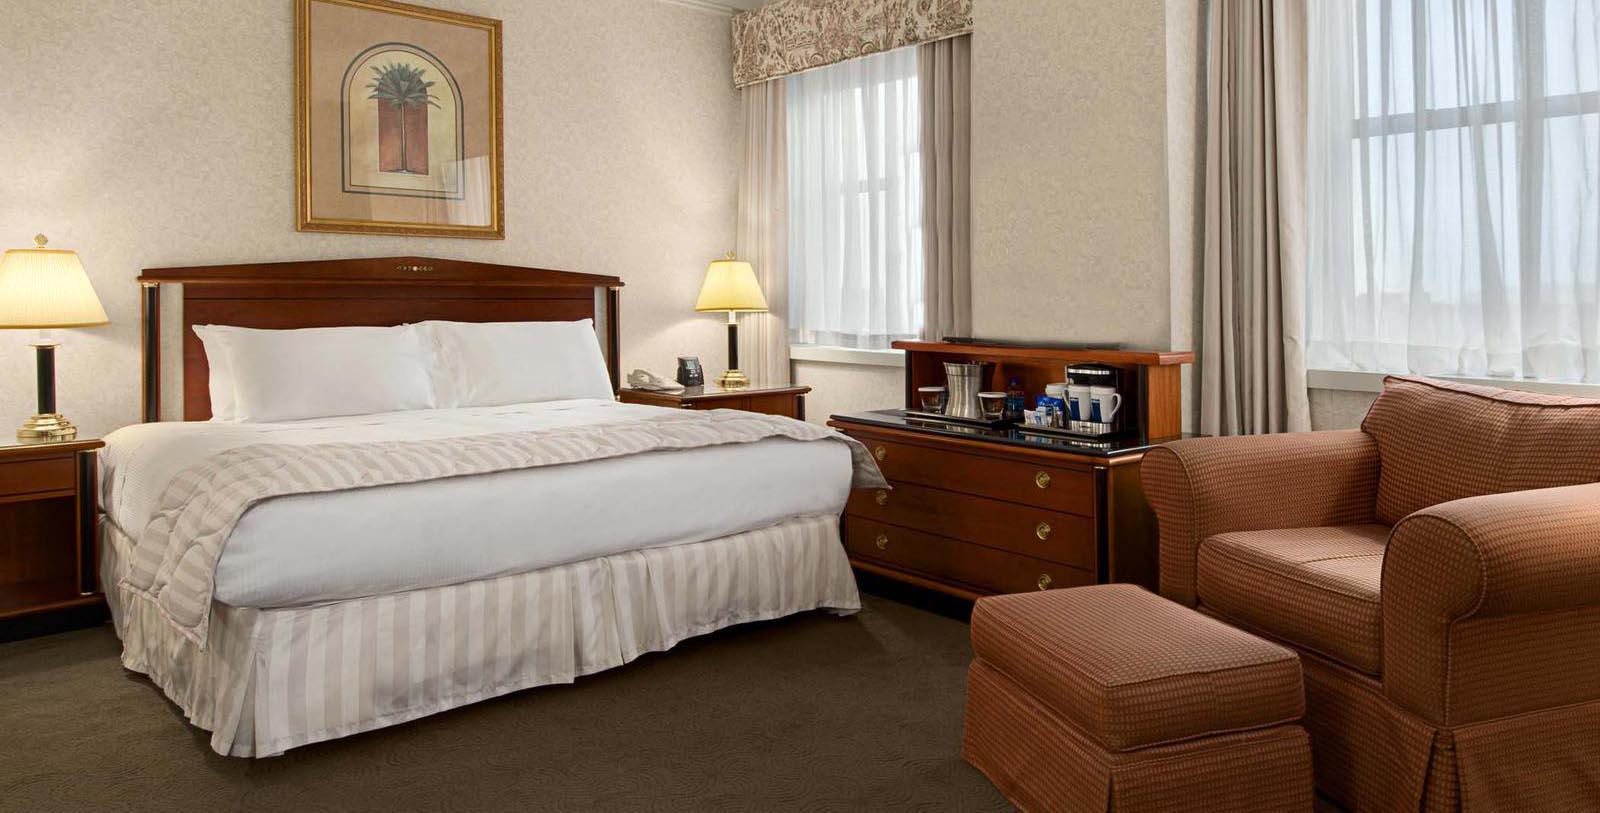 Image of guestroom Hilton Cincinnati Netherland Plaza, 1931, Member of Historic Hotels of America, in Cincinnati, Ohio,Experience